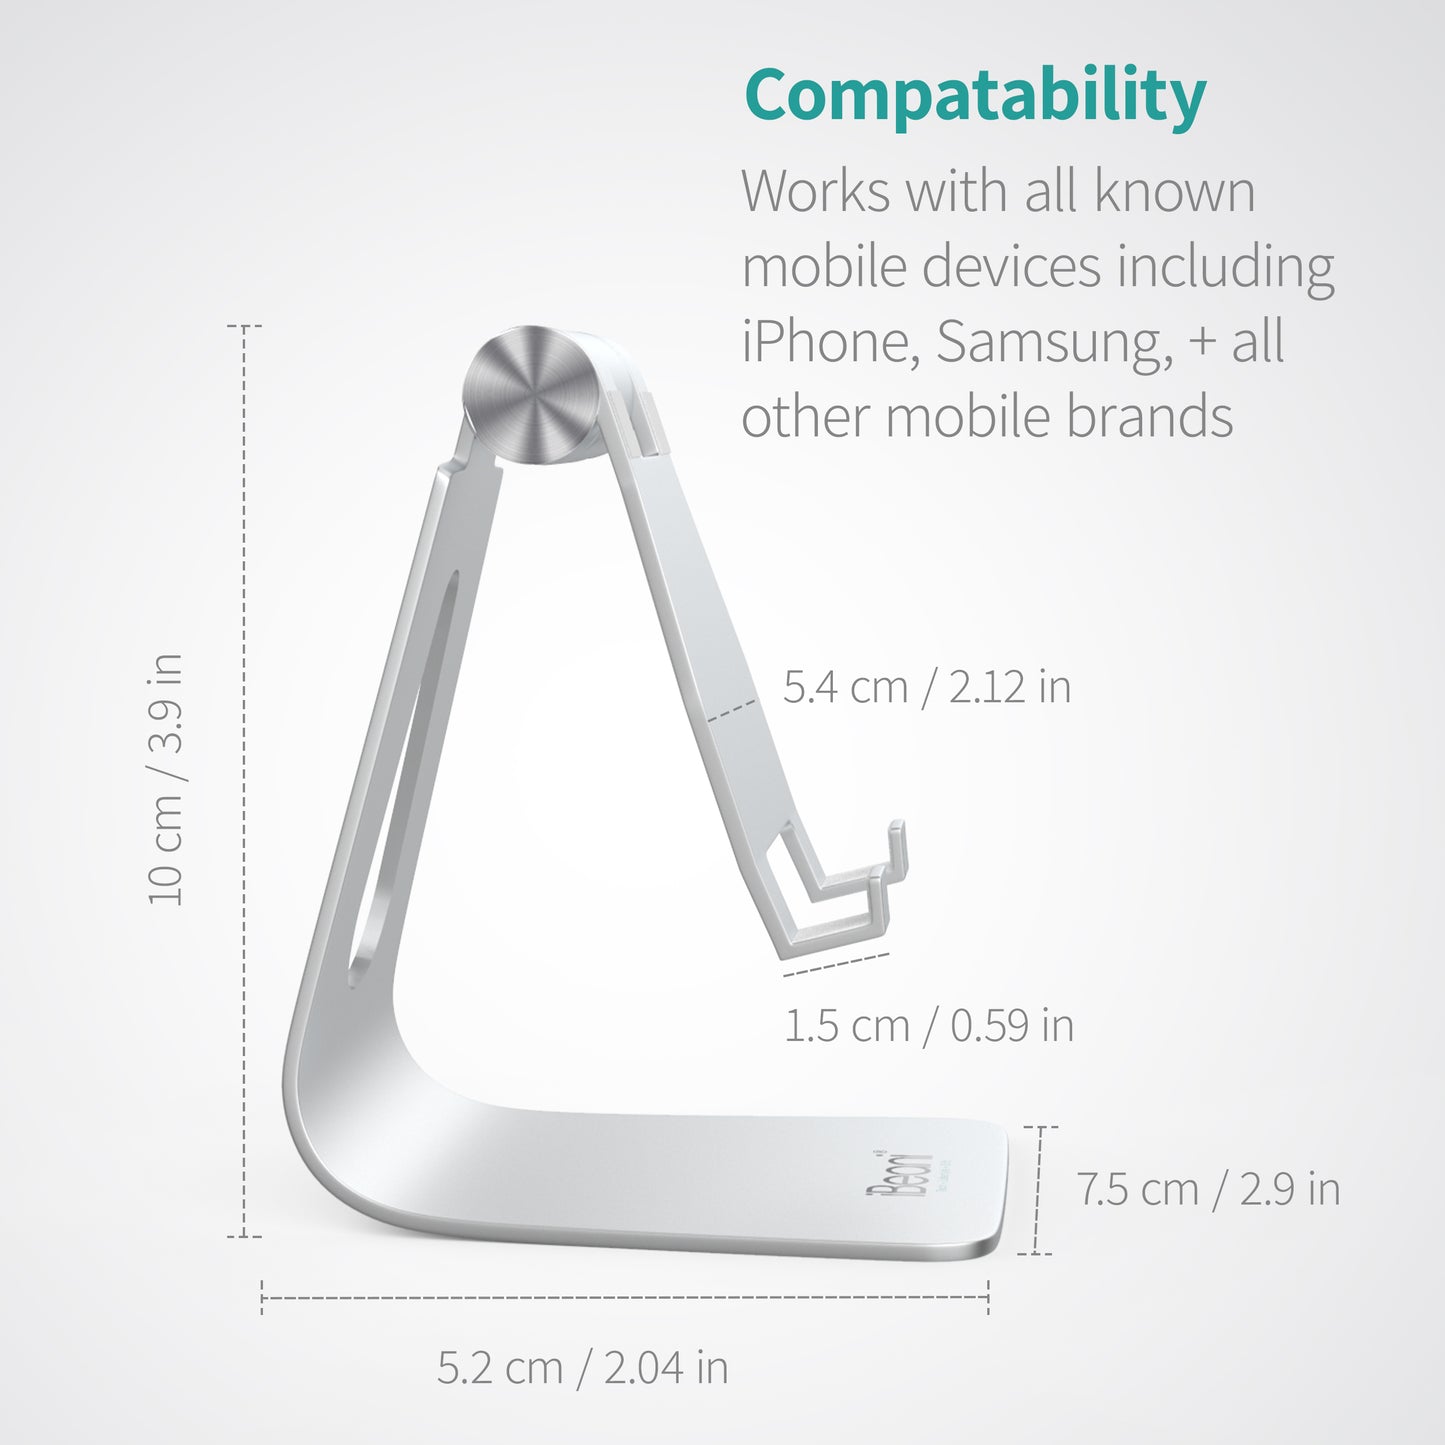 Universal Adjustable Mobile Phone Stand by iBeani - Aluminium